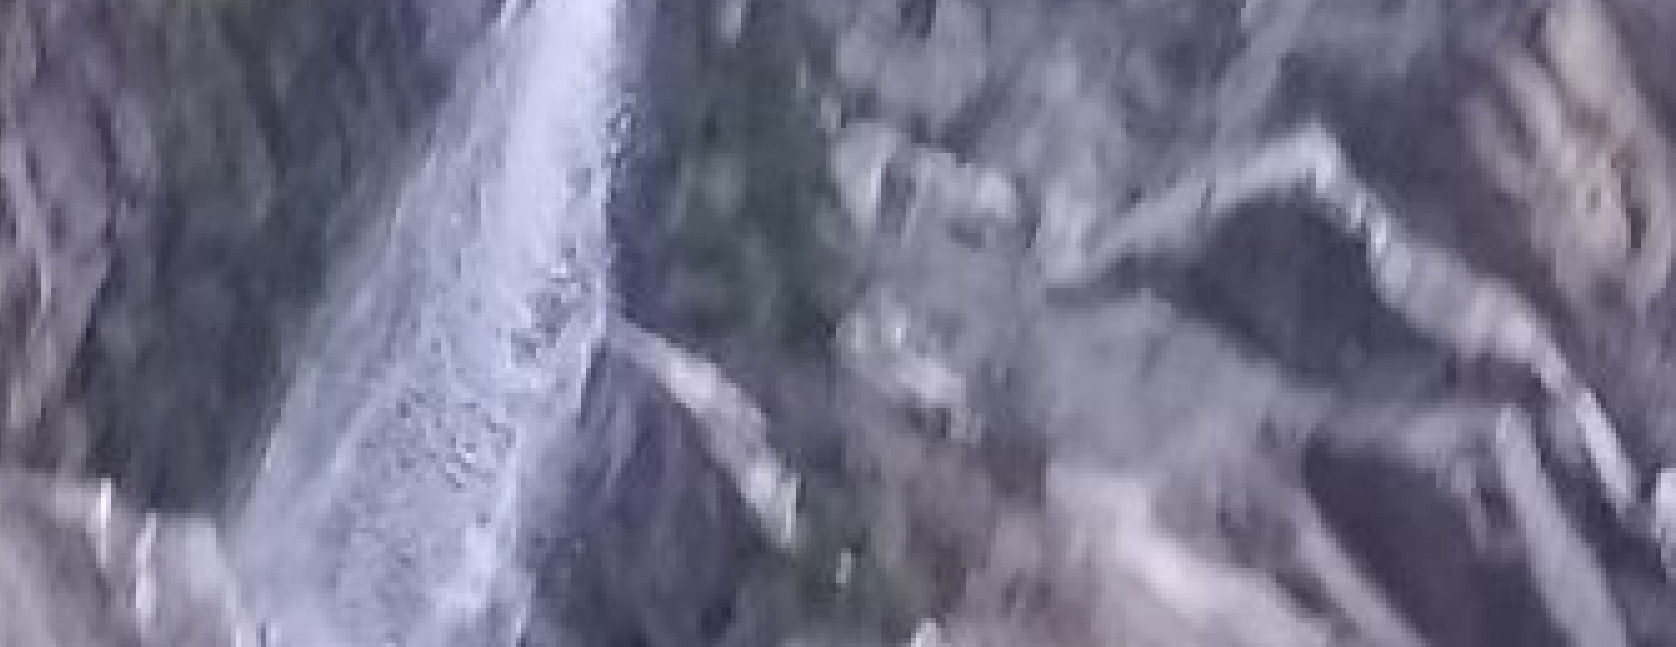 Jogini Falls Manali Tour, Himachal Pradesh